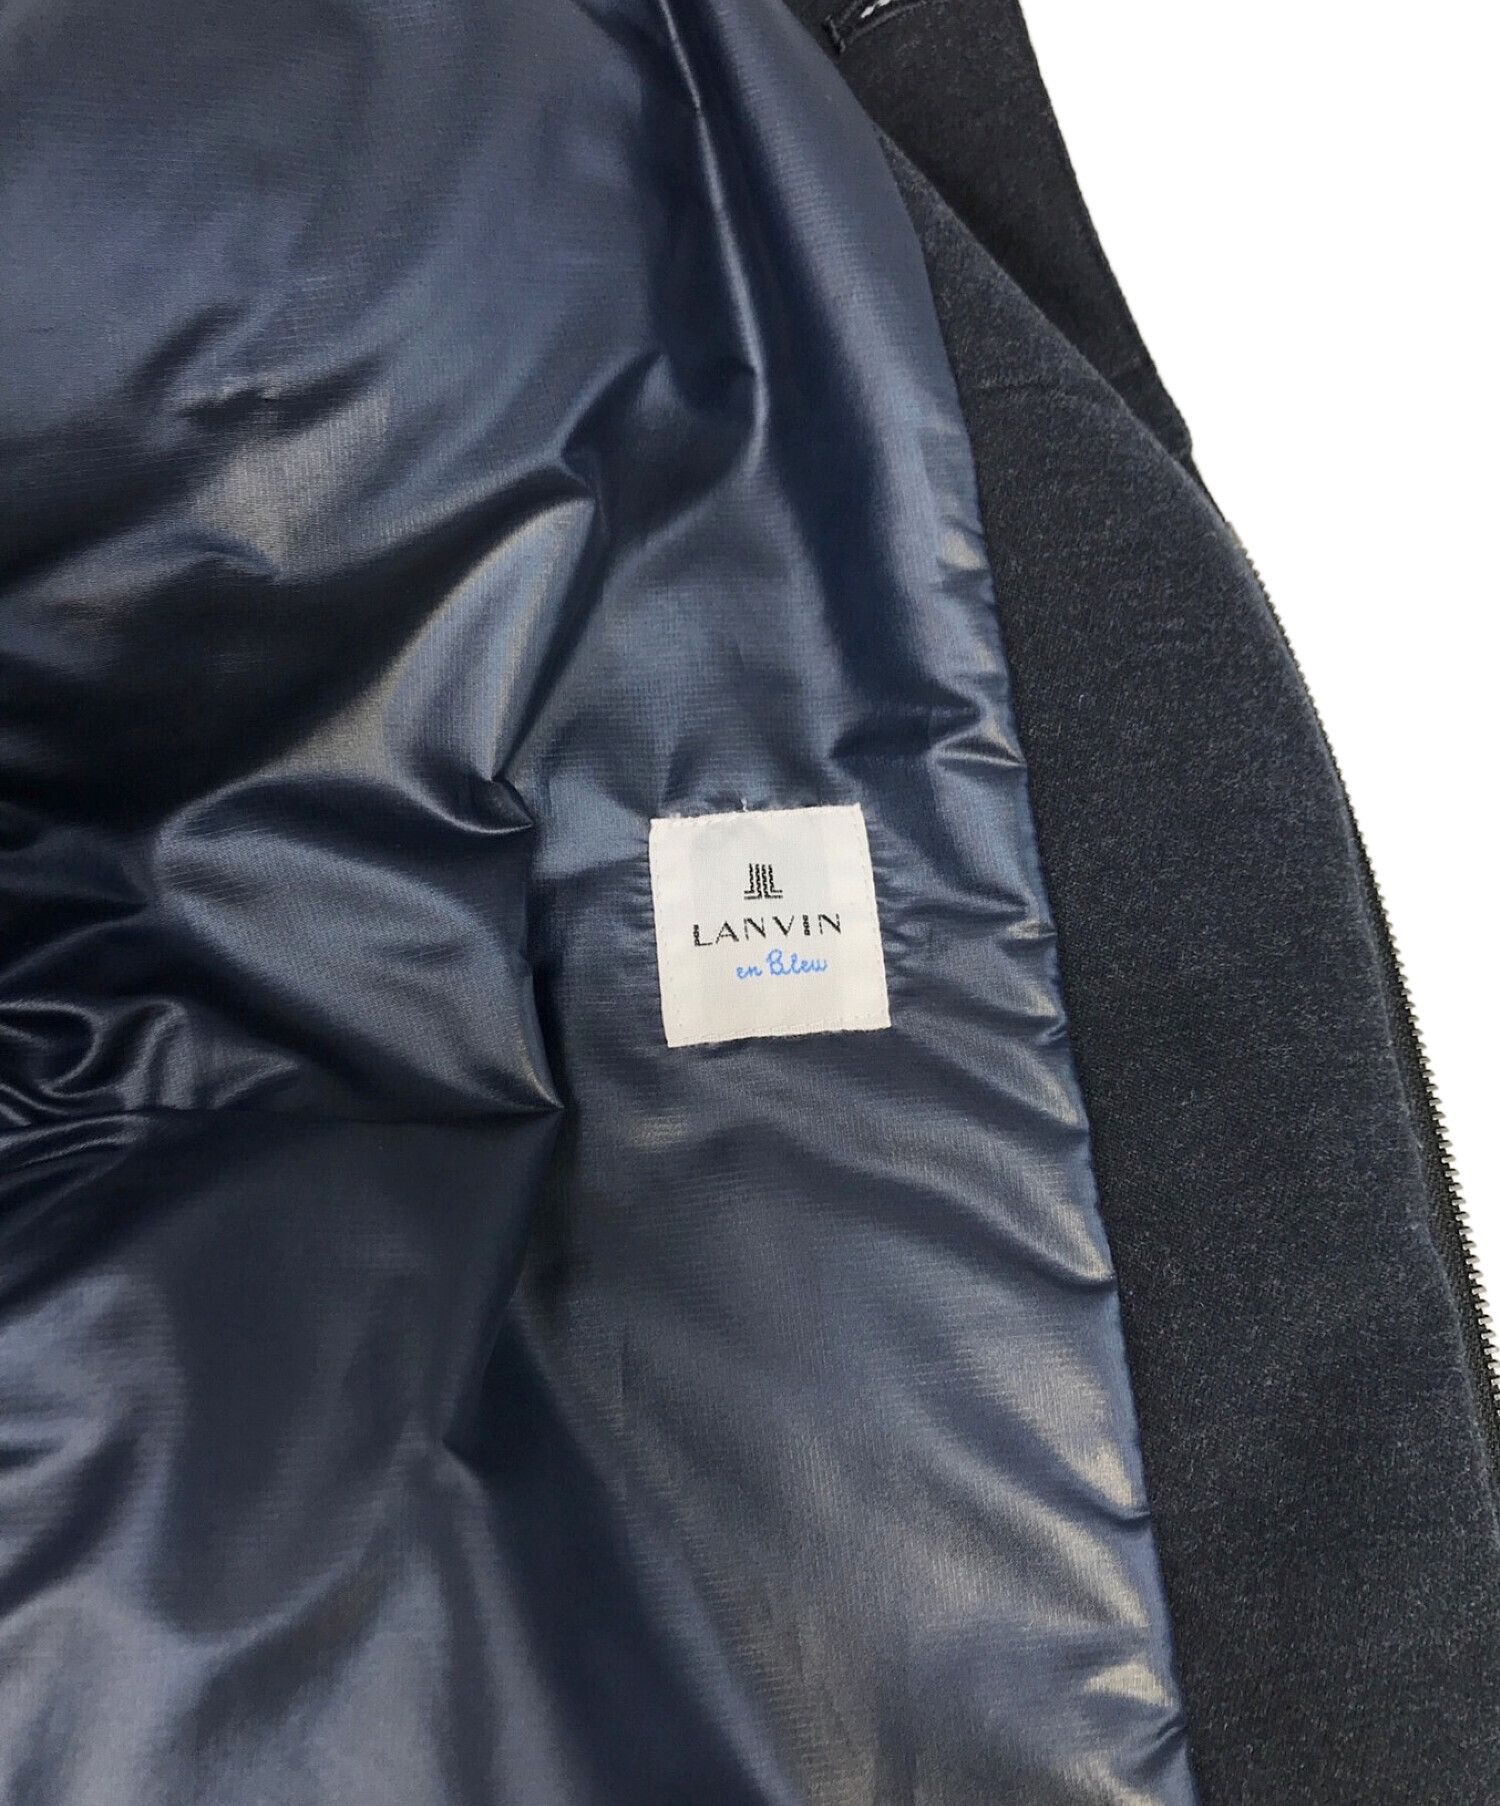 LANVIN en Bleu (ランバンオンブルー) 異素材切替ジャケット ブラック×グレー サイズ:48